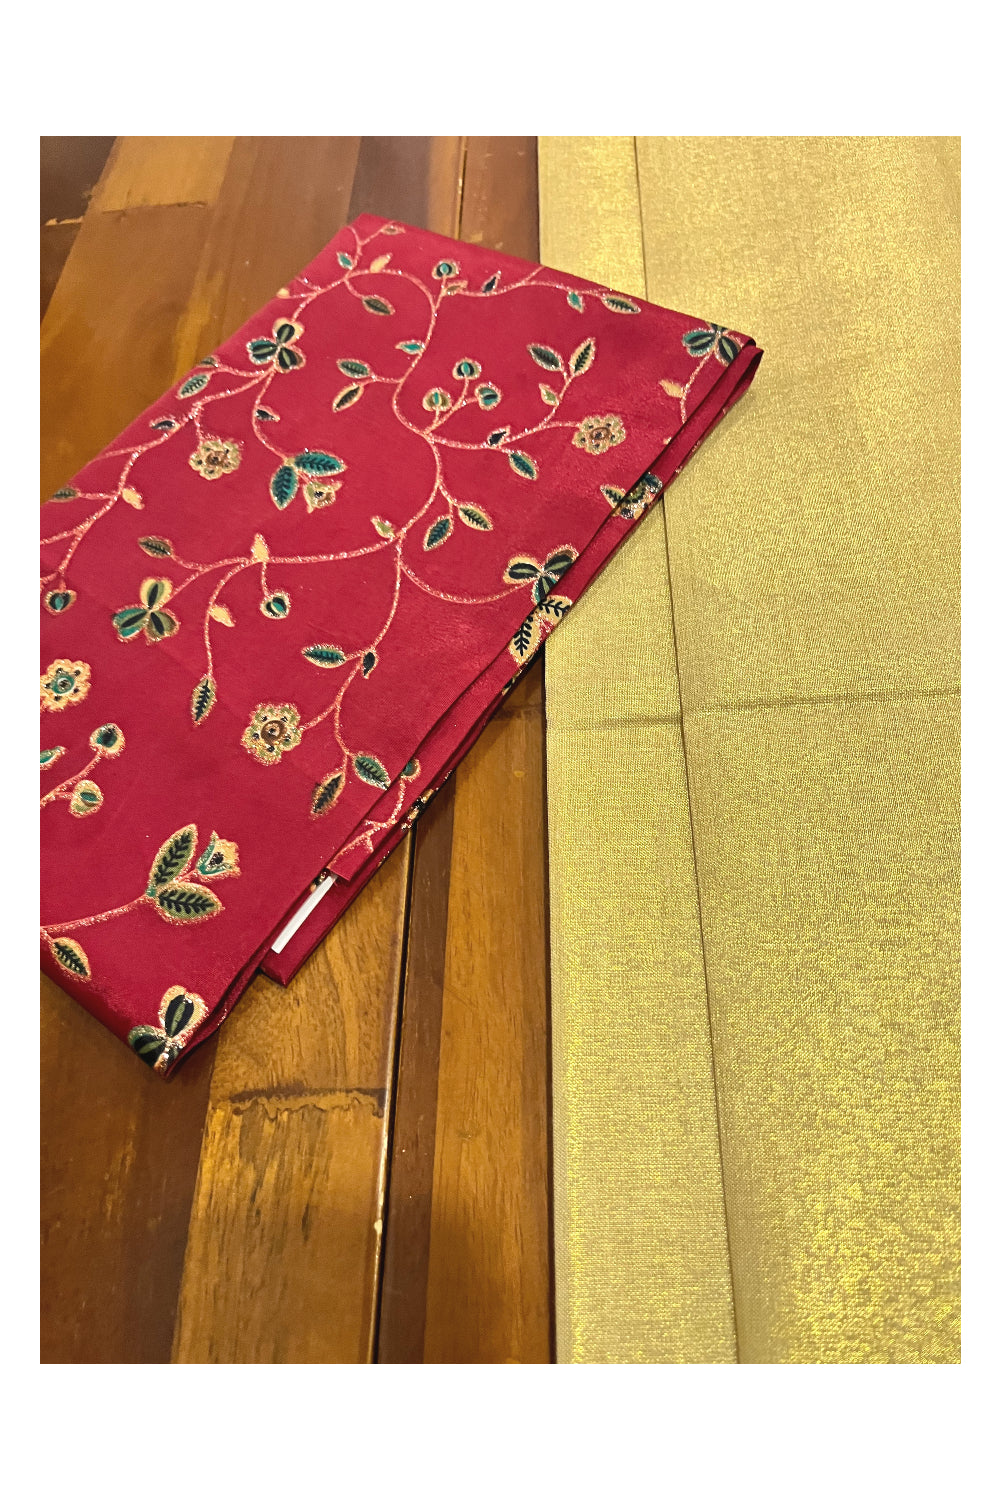 Kerala Tissue Block Printed Pavada and Red Designer Blouse Material for Kids/Girls 4.3 Meters